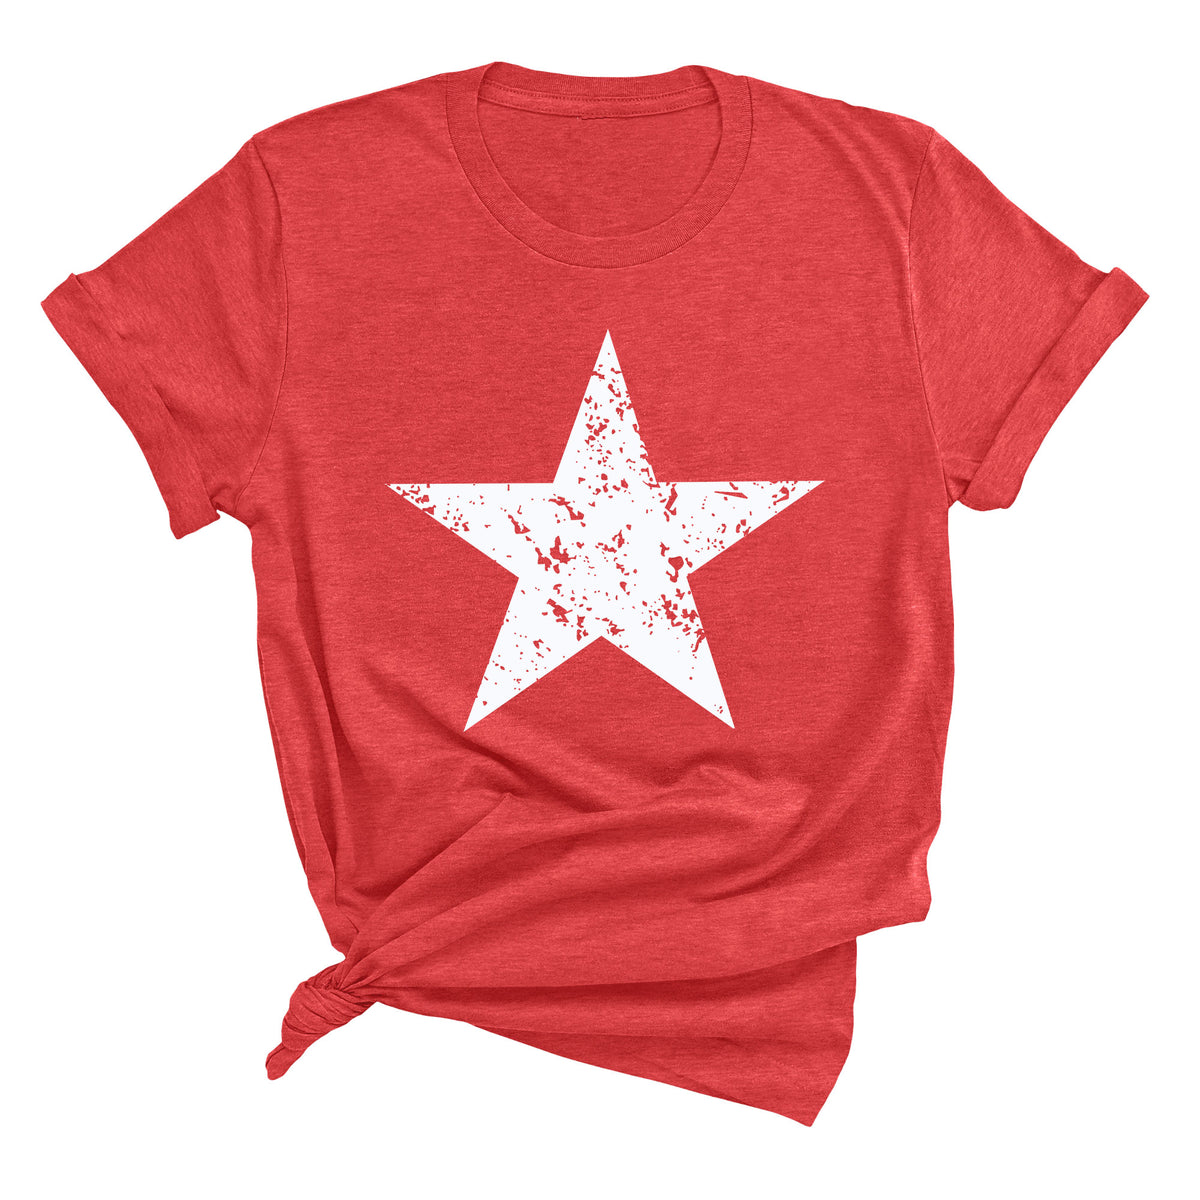 Distressed Star Unisex T-Shirt